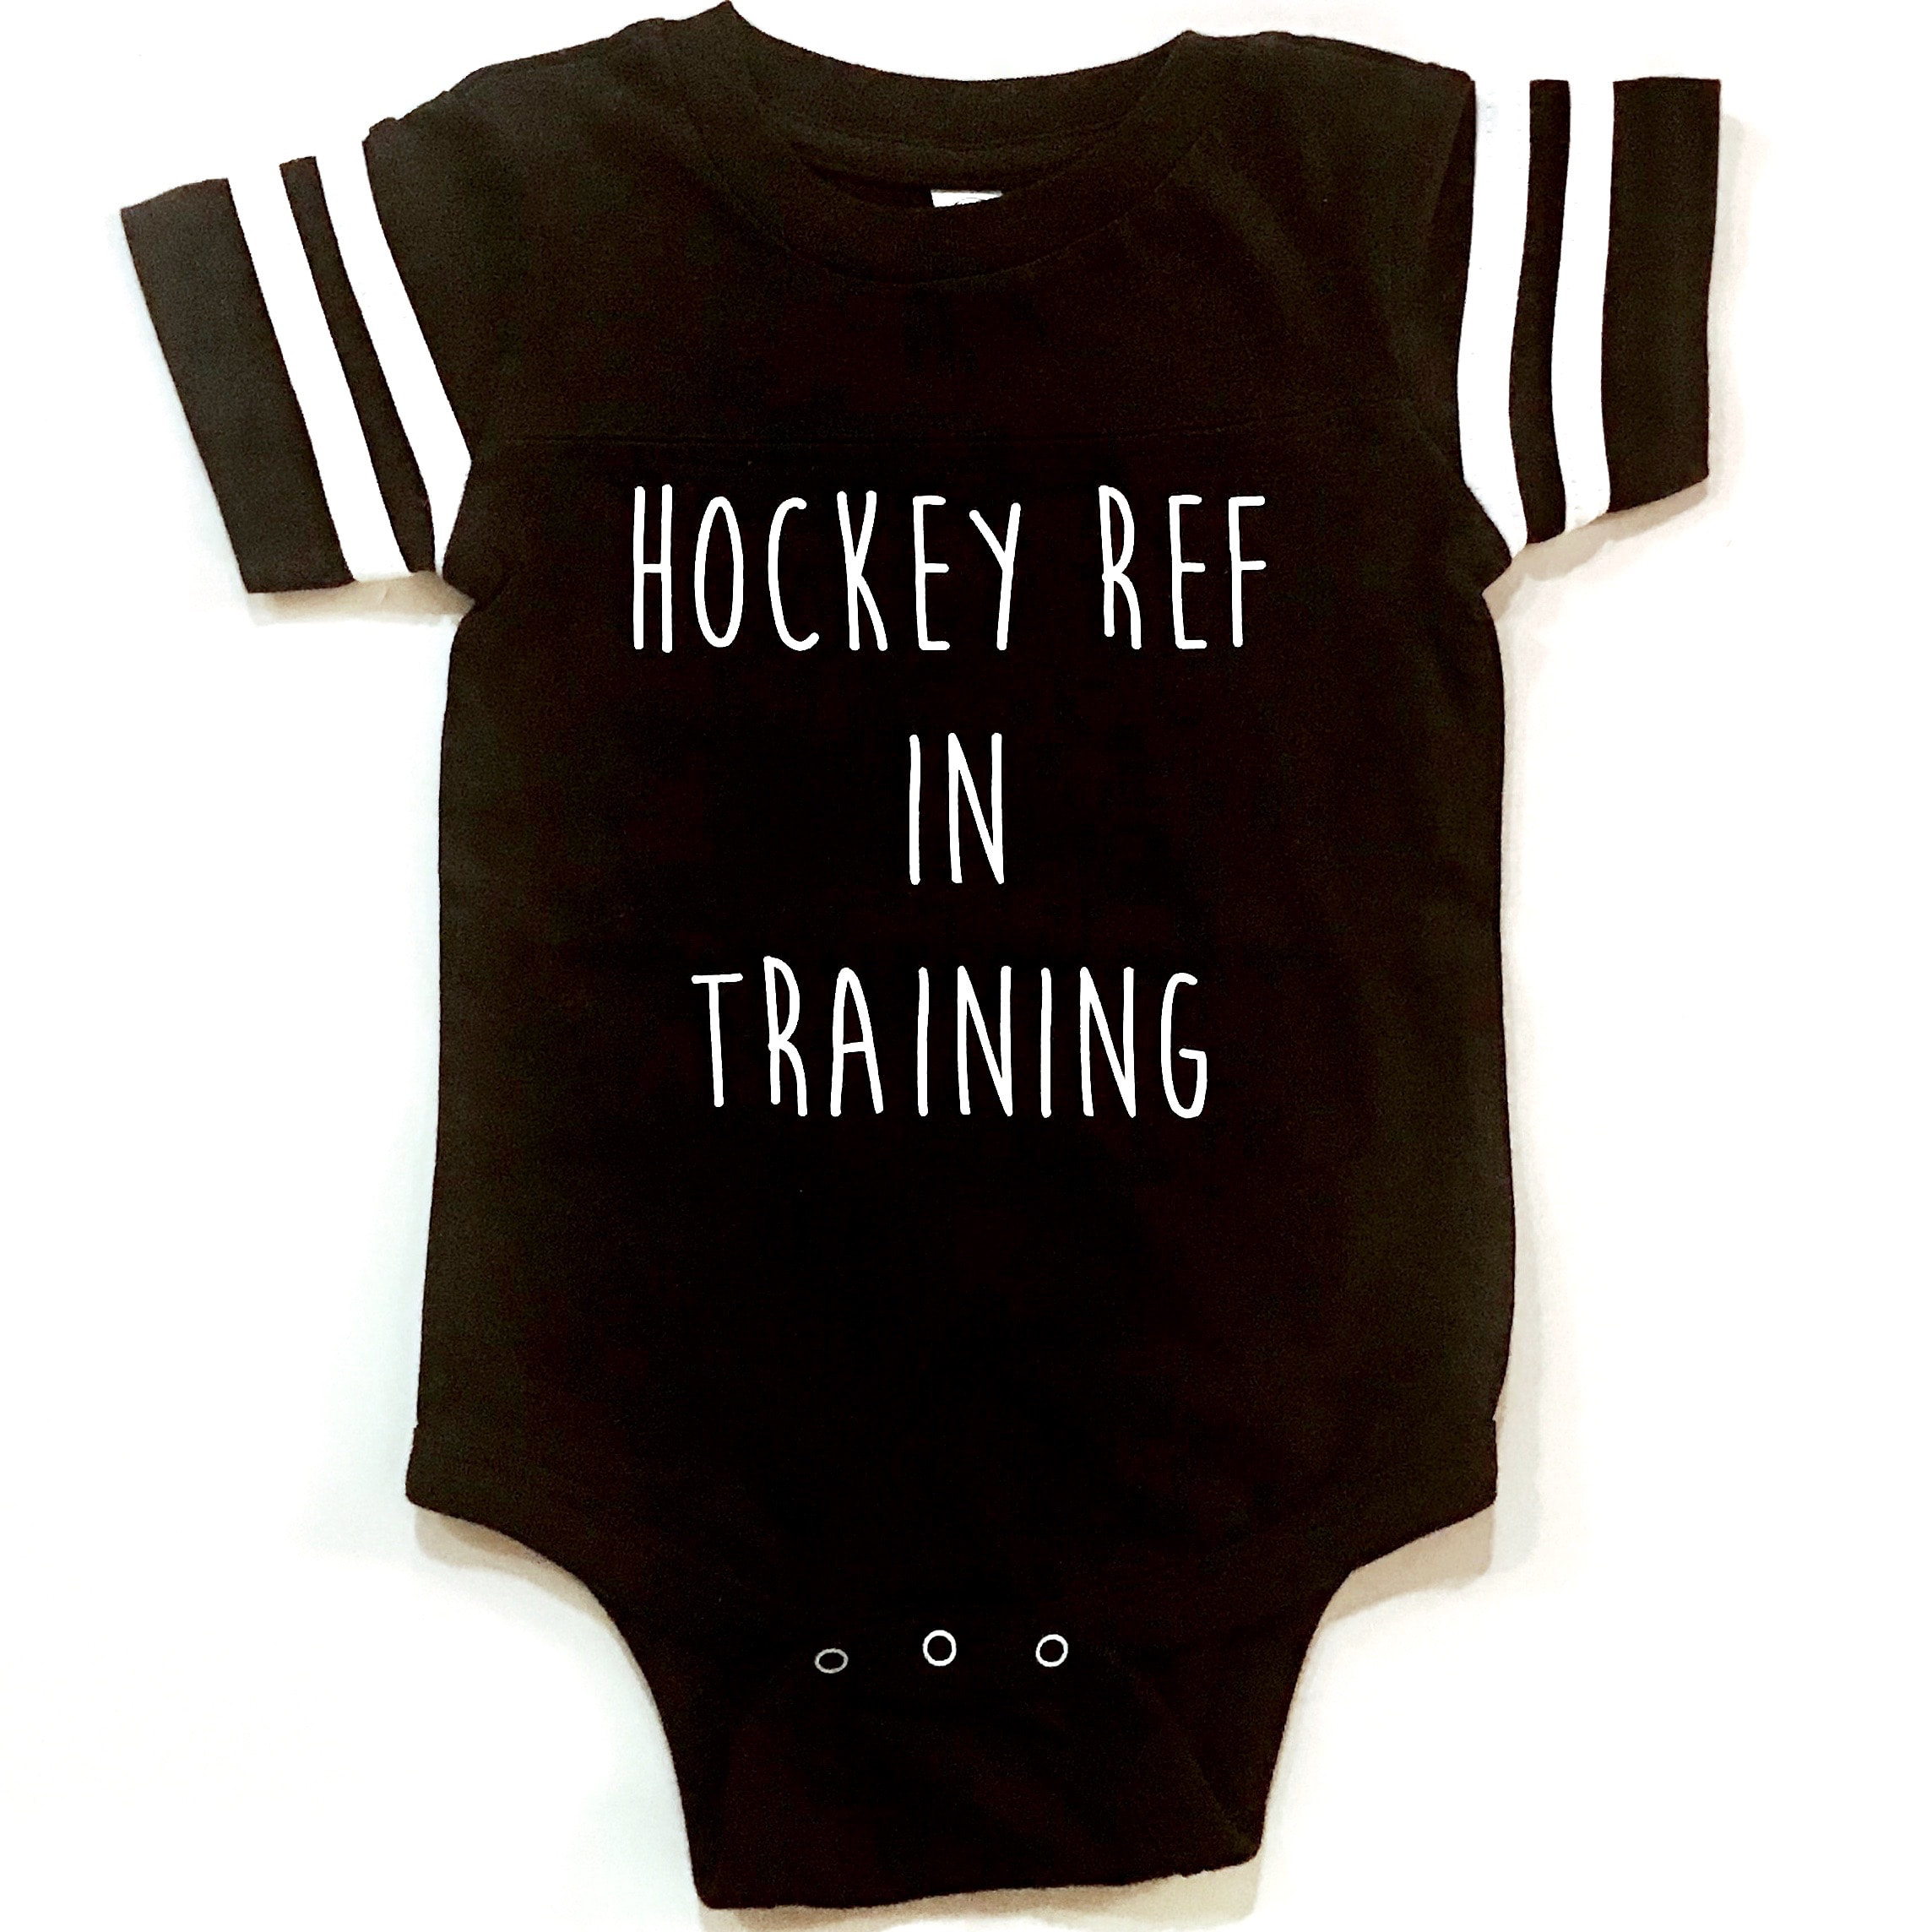 Hockey Ref in Training Baby Onesie